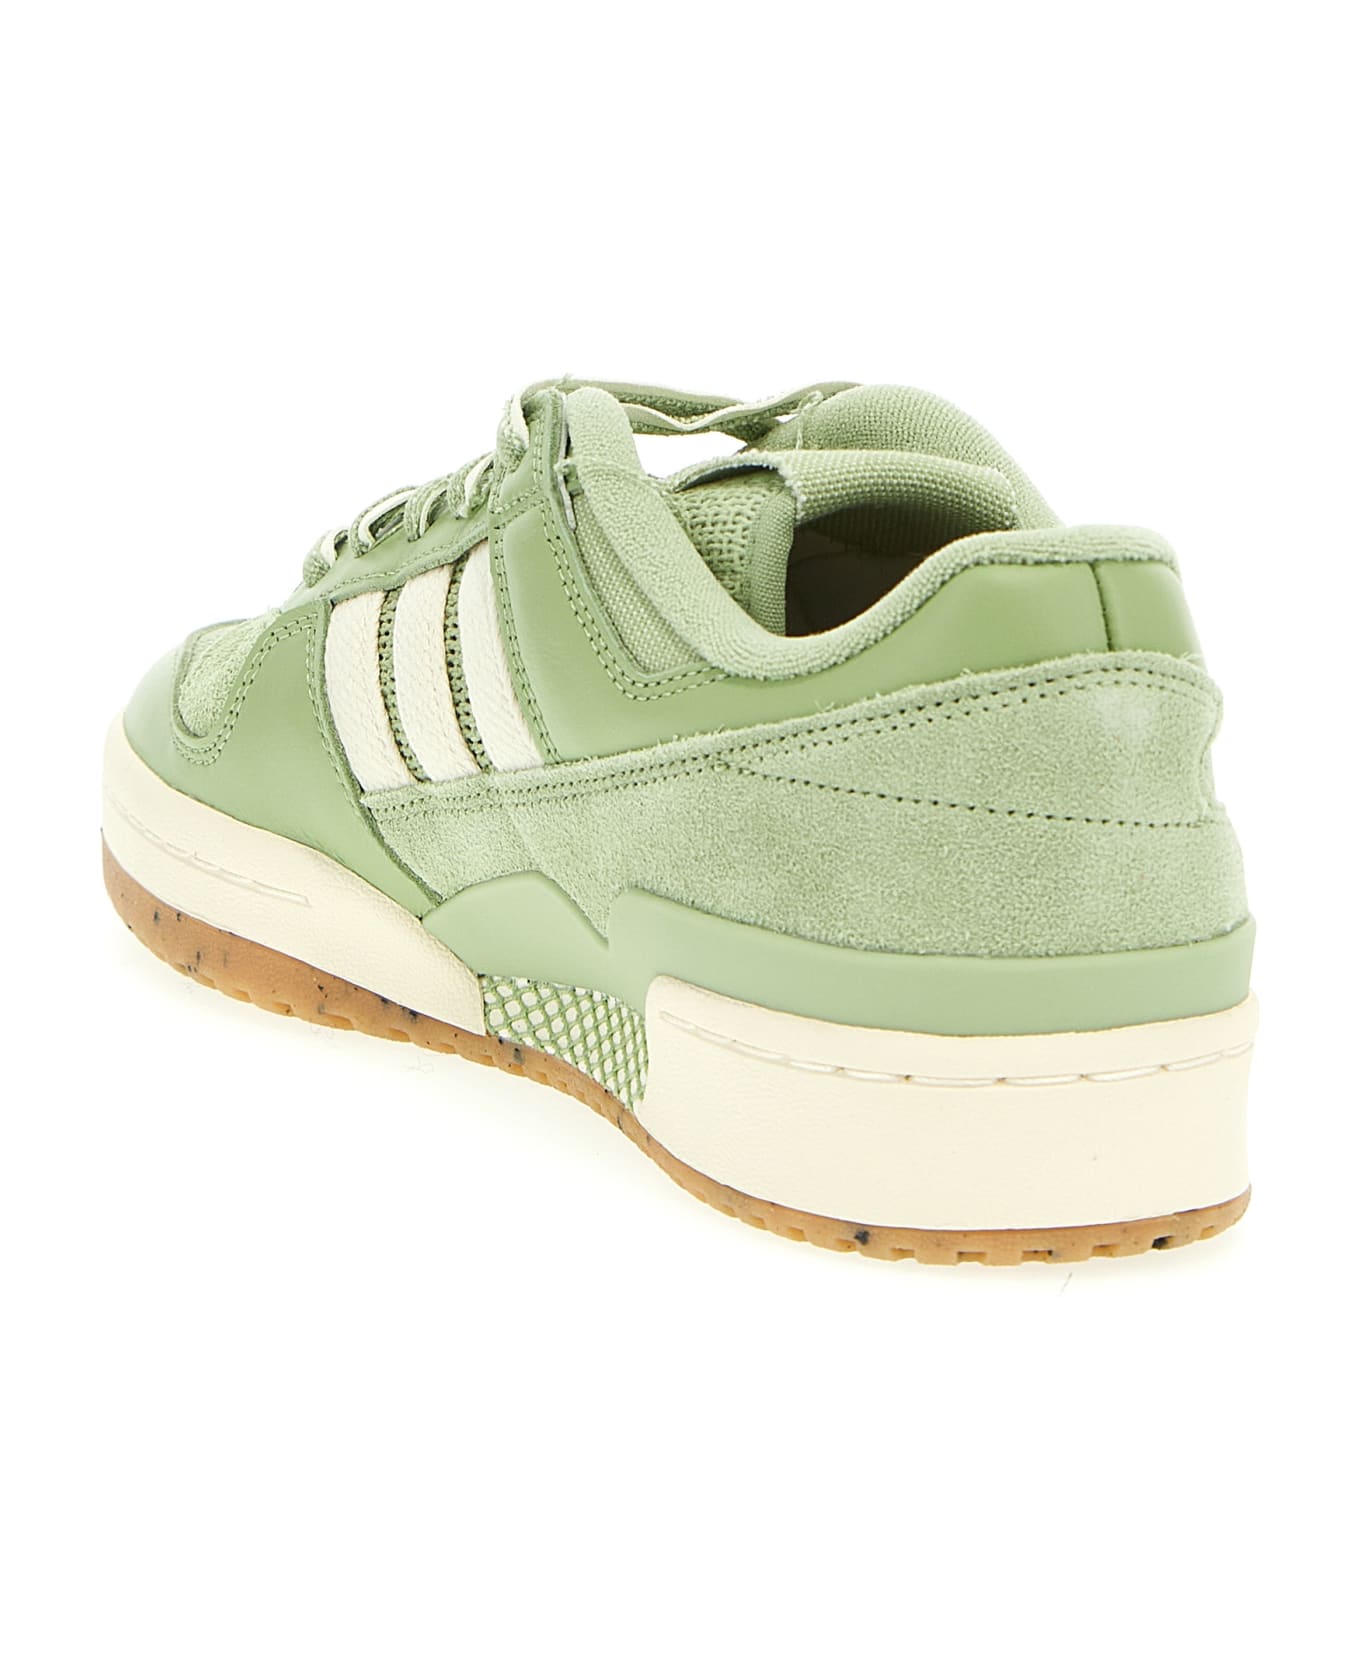 Adidas Originals Forum 84 Low Sneakers - Green